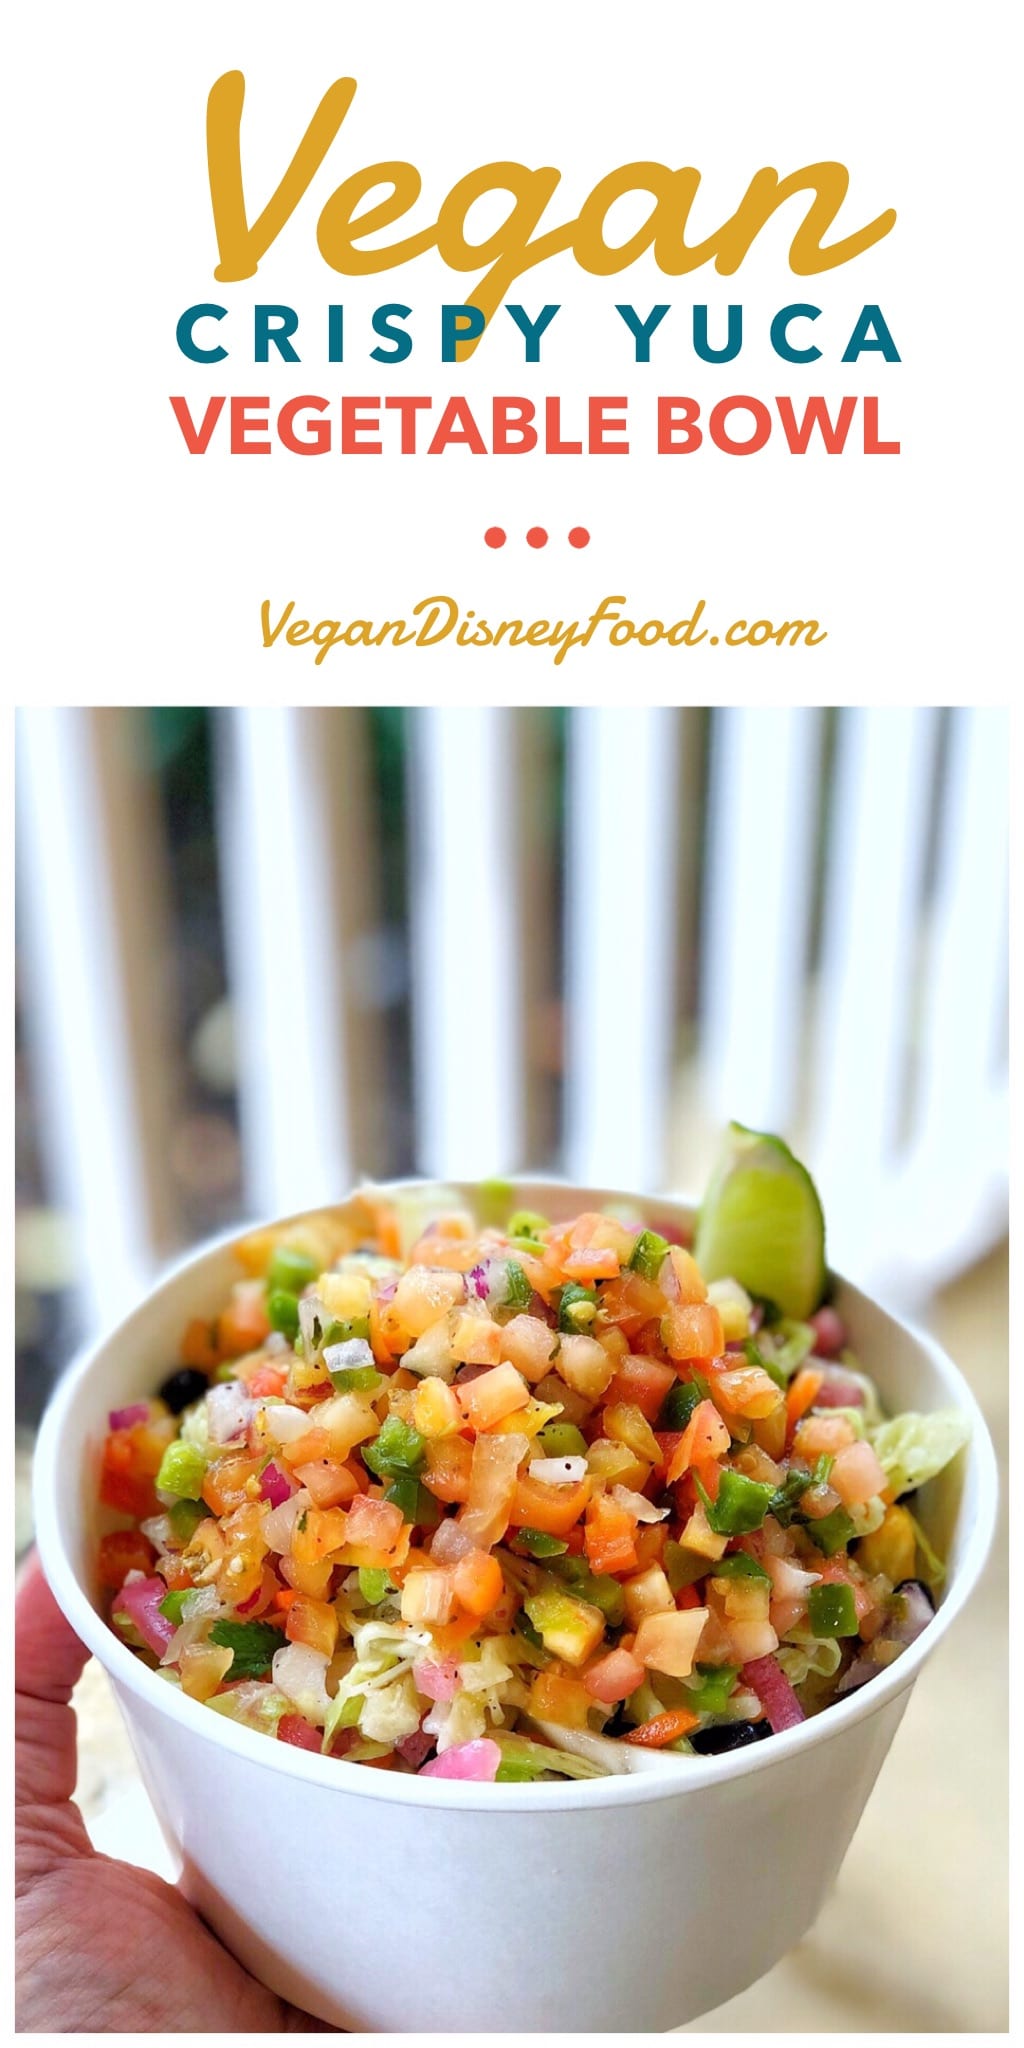 Vegan Crispy Yuca Vegetable Bowl at Disney’s Caribbean Beach Resort at Walt Disney World